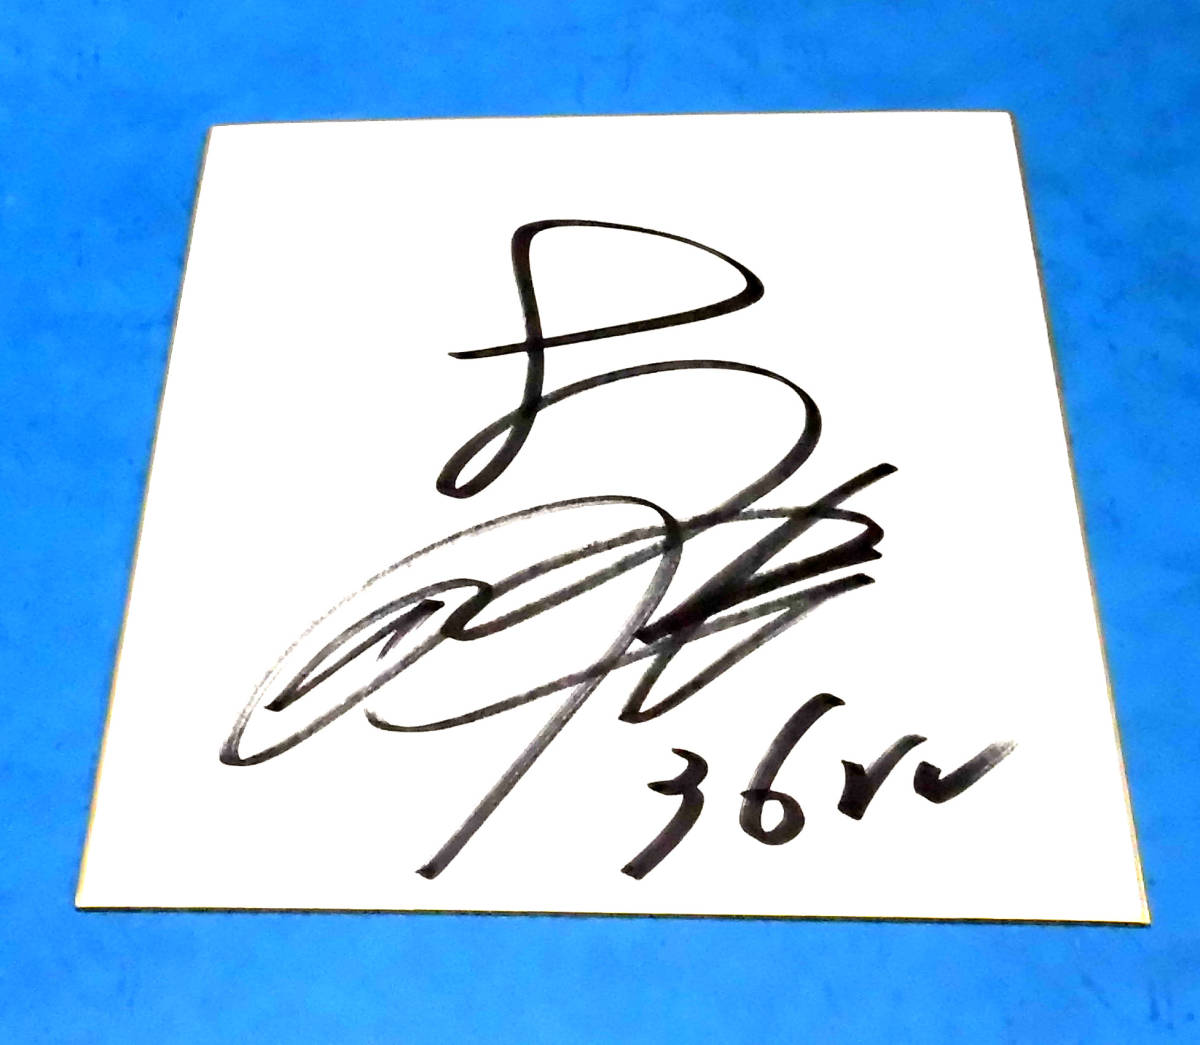 ☆★Boat race Tomoya Yamazaki (Gunma) autographed colored paper + autographed T-shirt 3622 defective Boat race★☆★ SG7 champion!!+Bonus☆★, sports, leisure, Boat race, others